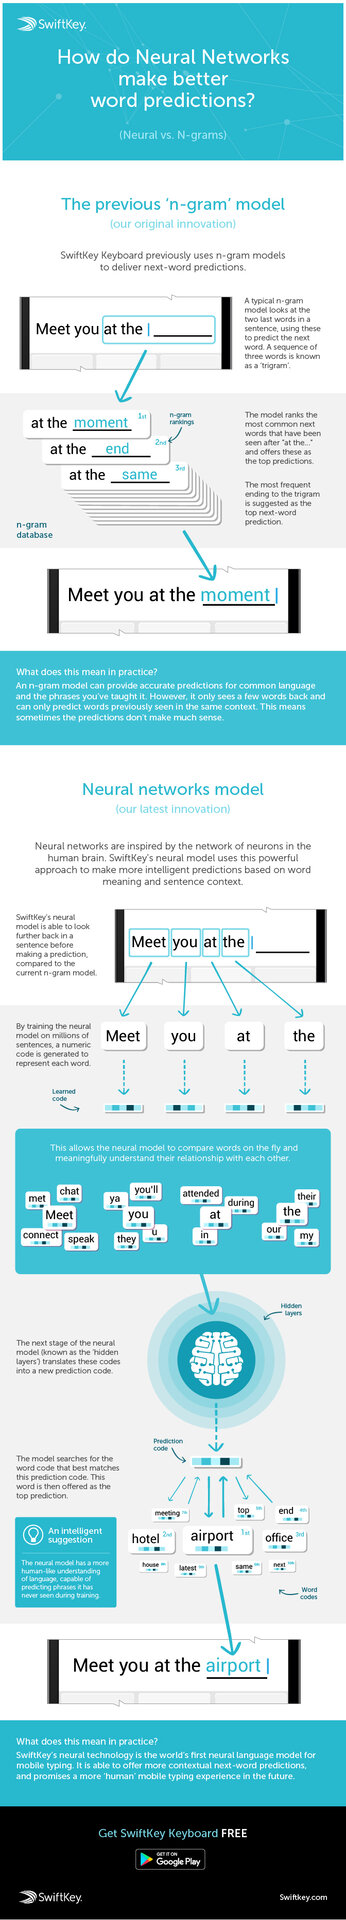 Infografía de redes neuronales Swiftkey